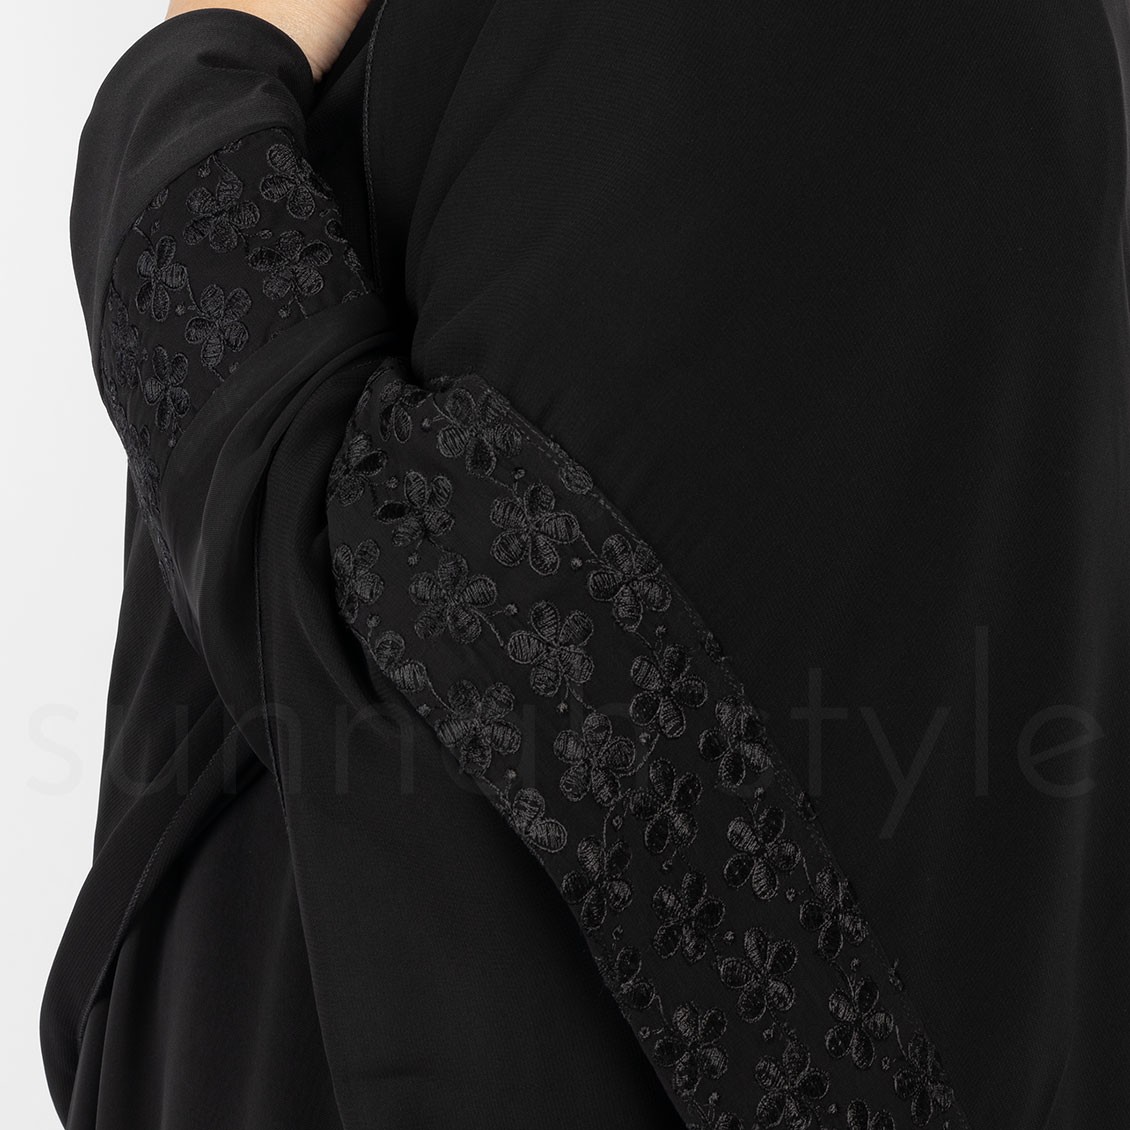 Sunnah Style Daisy Shayla Embroidered Hijab